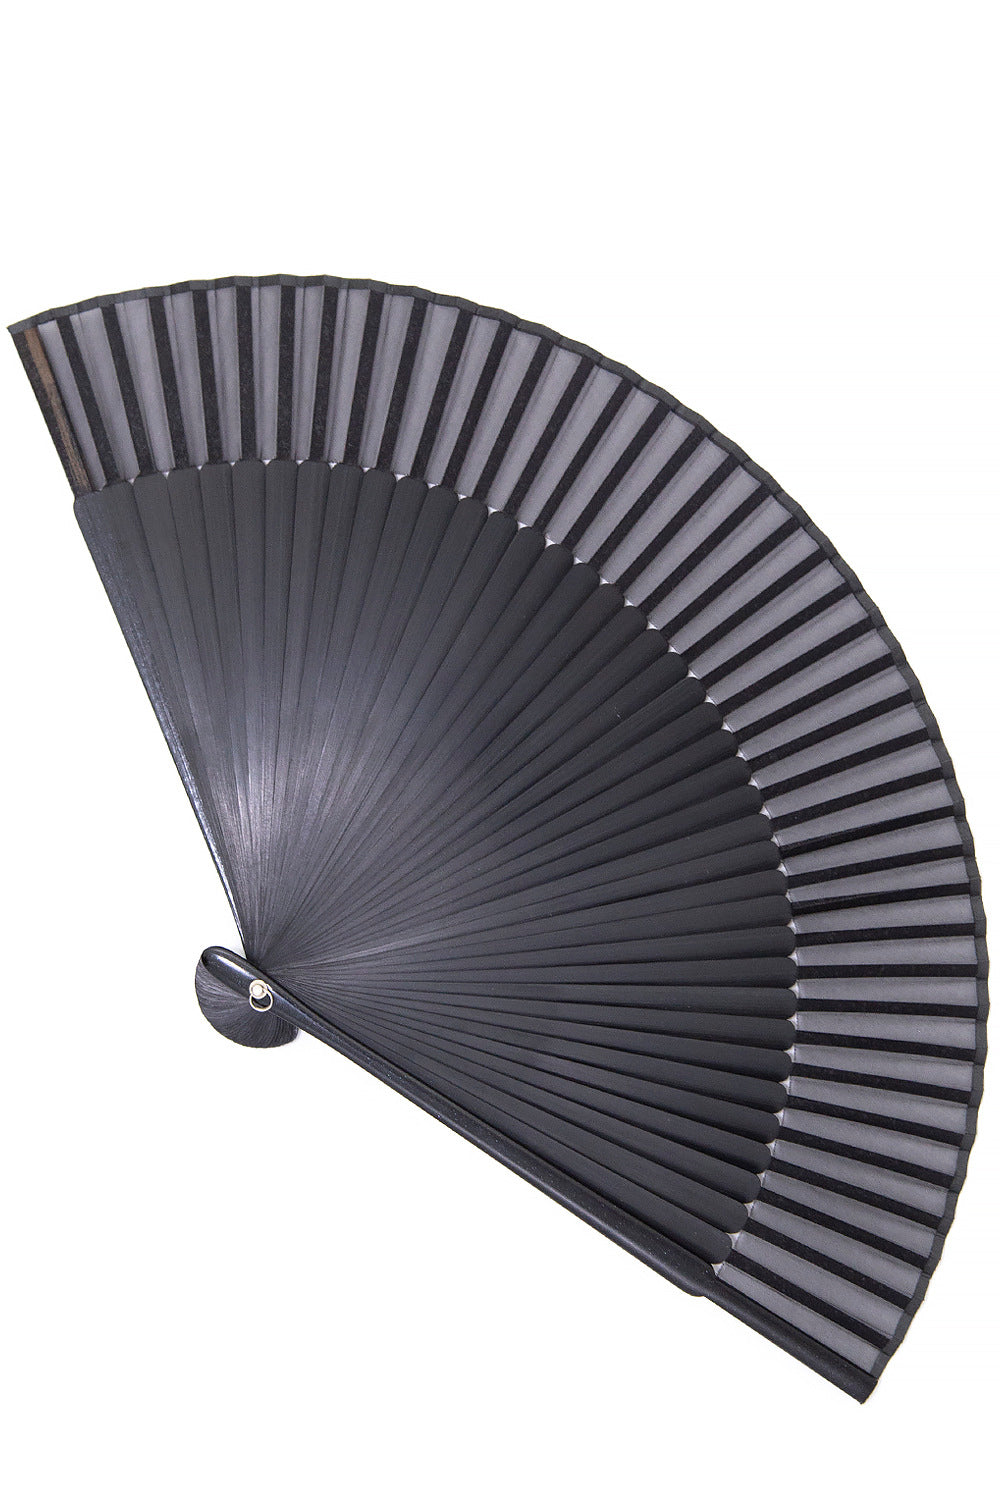 "Victoria" black fabric folding fan with black bamboo wood ribs